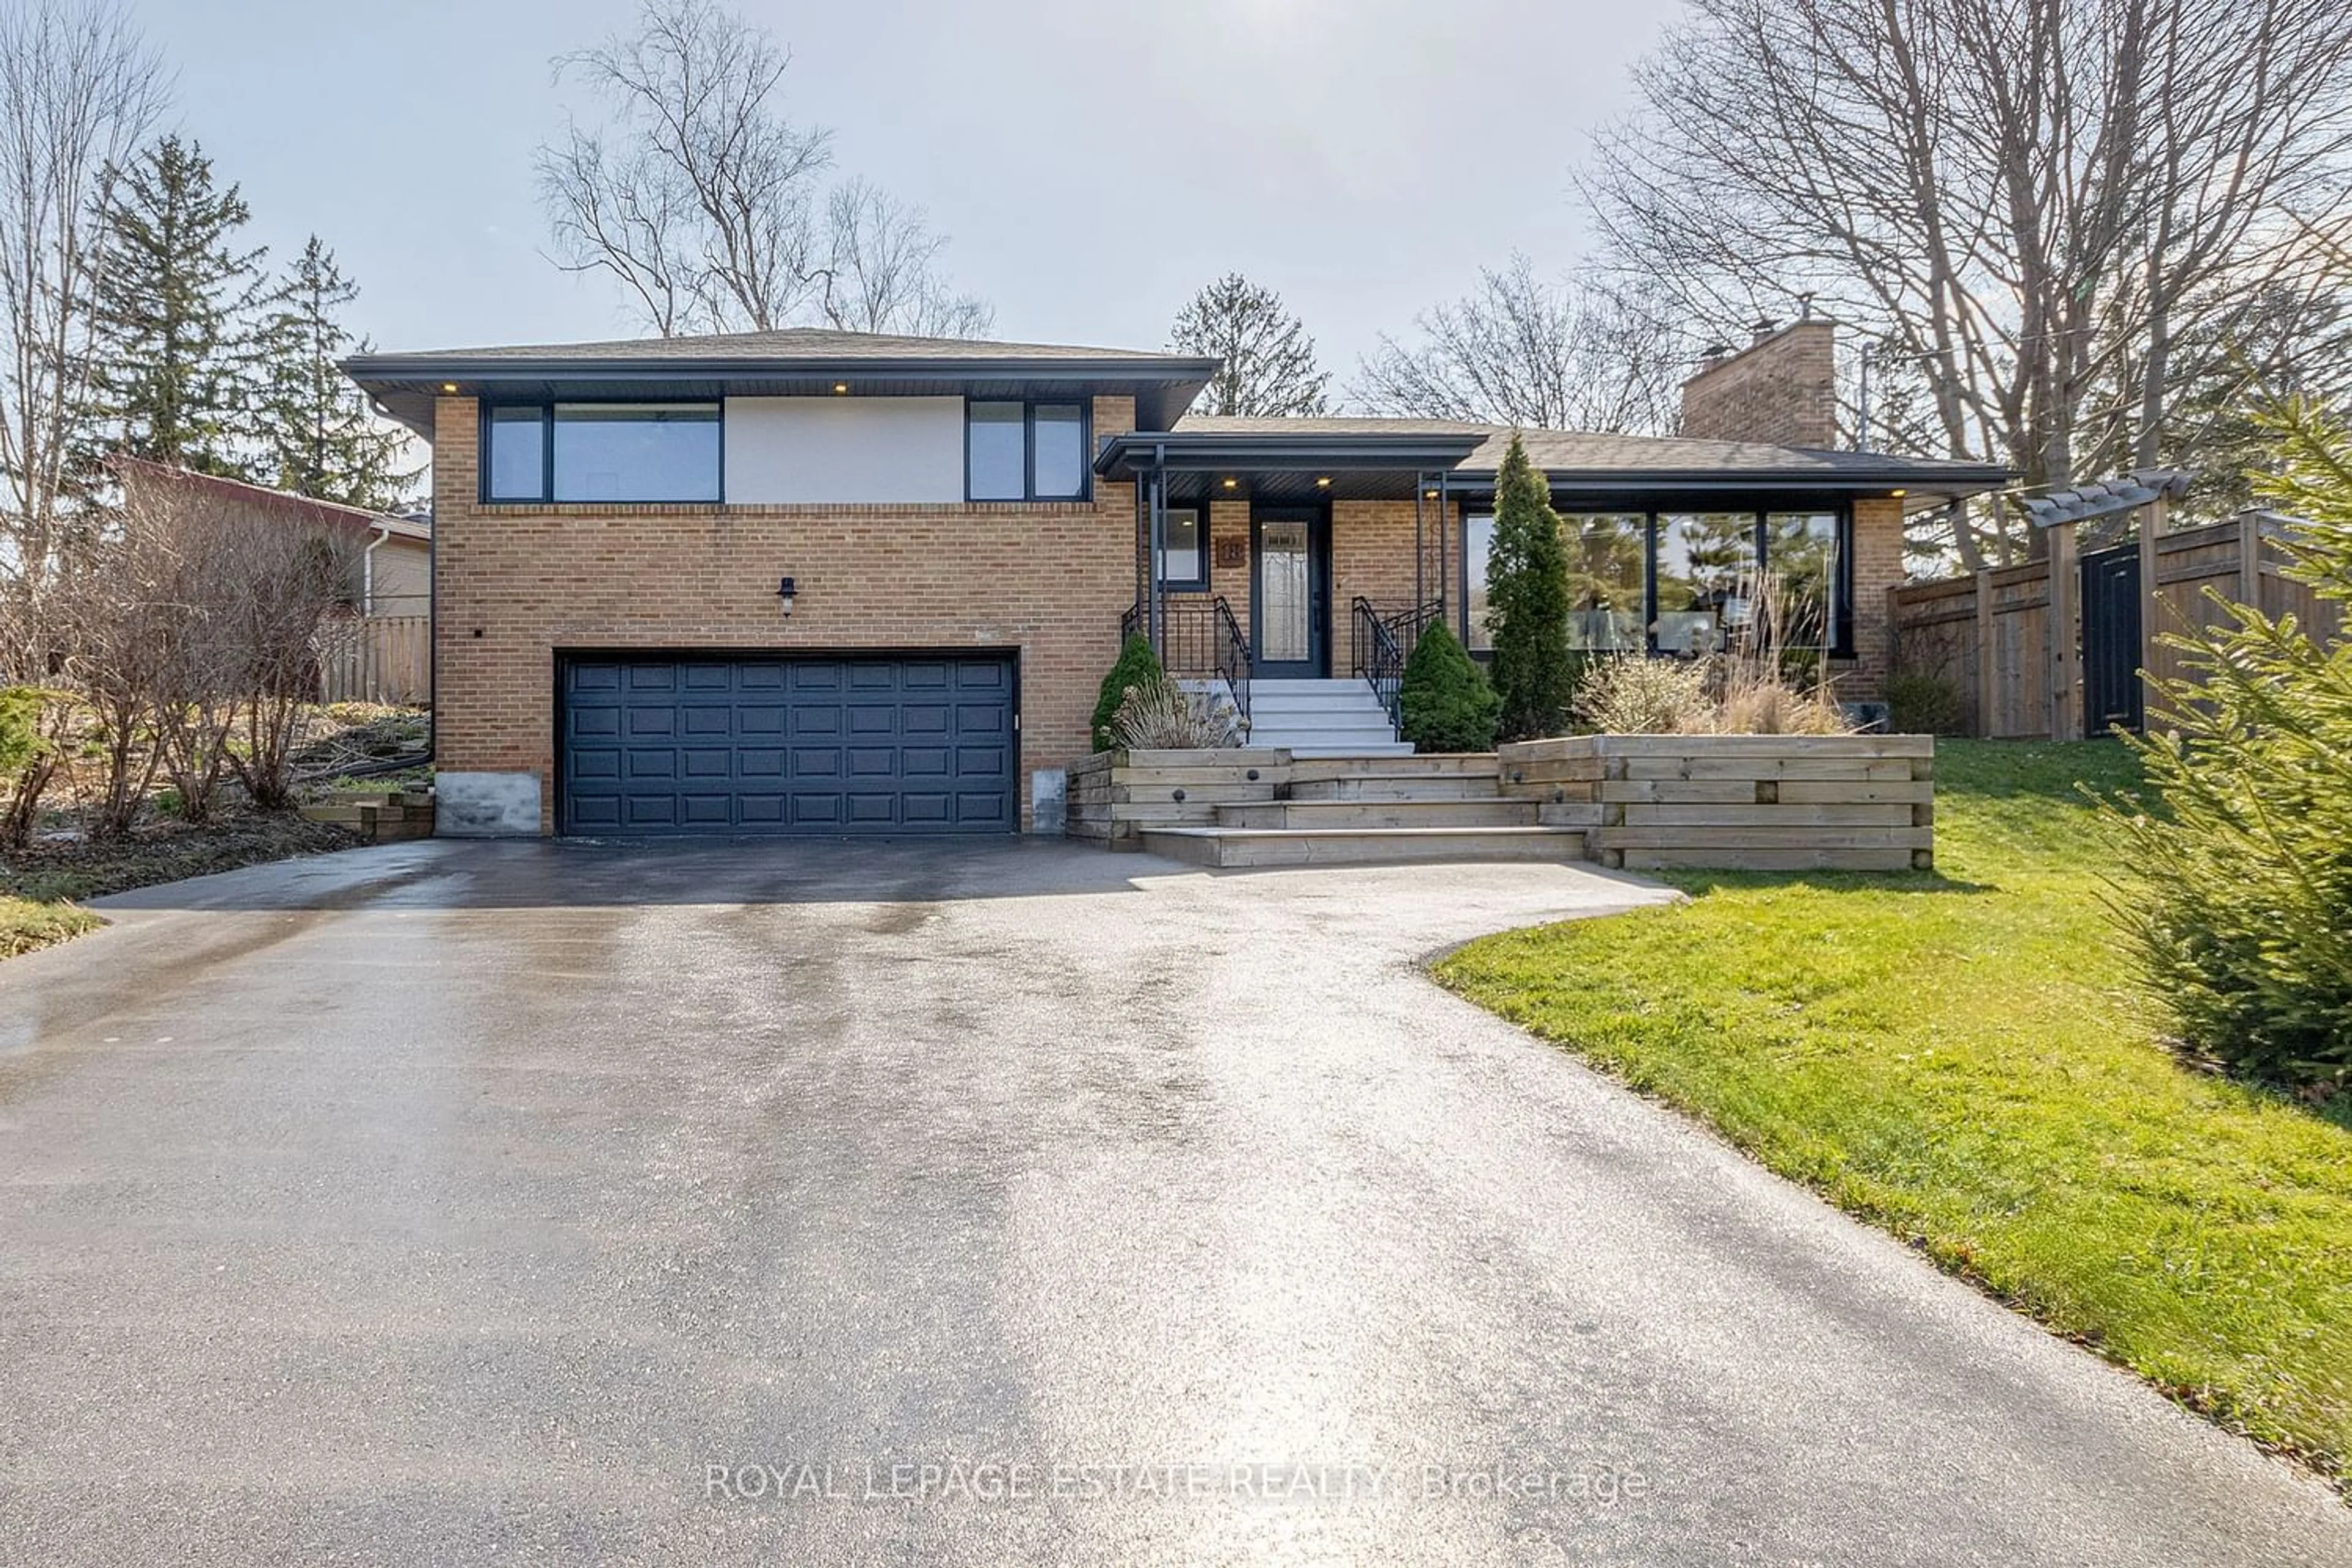 Home with brick exterior material for 18 Cudia Cres, Toronto Ontario M1M 2W8